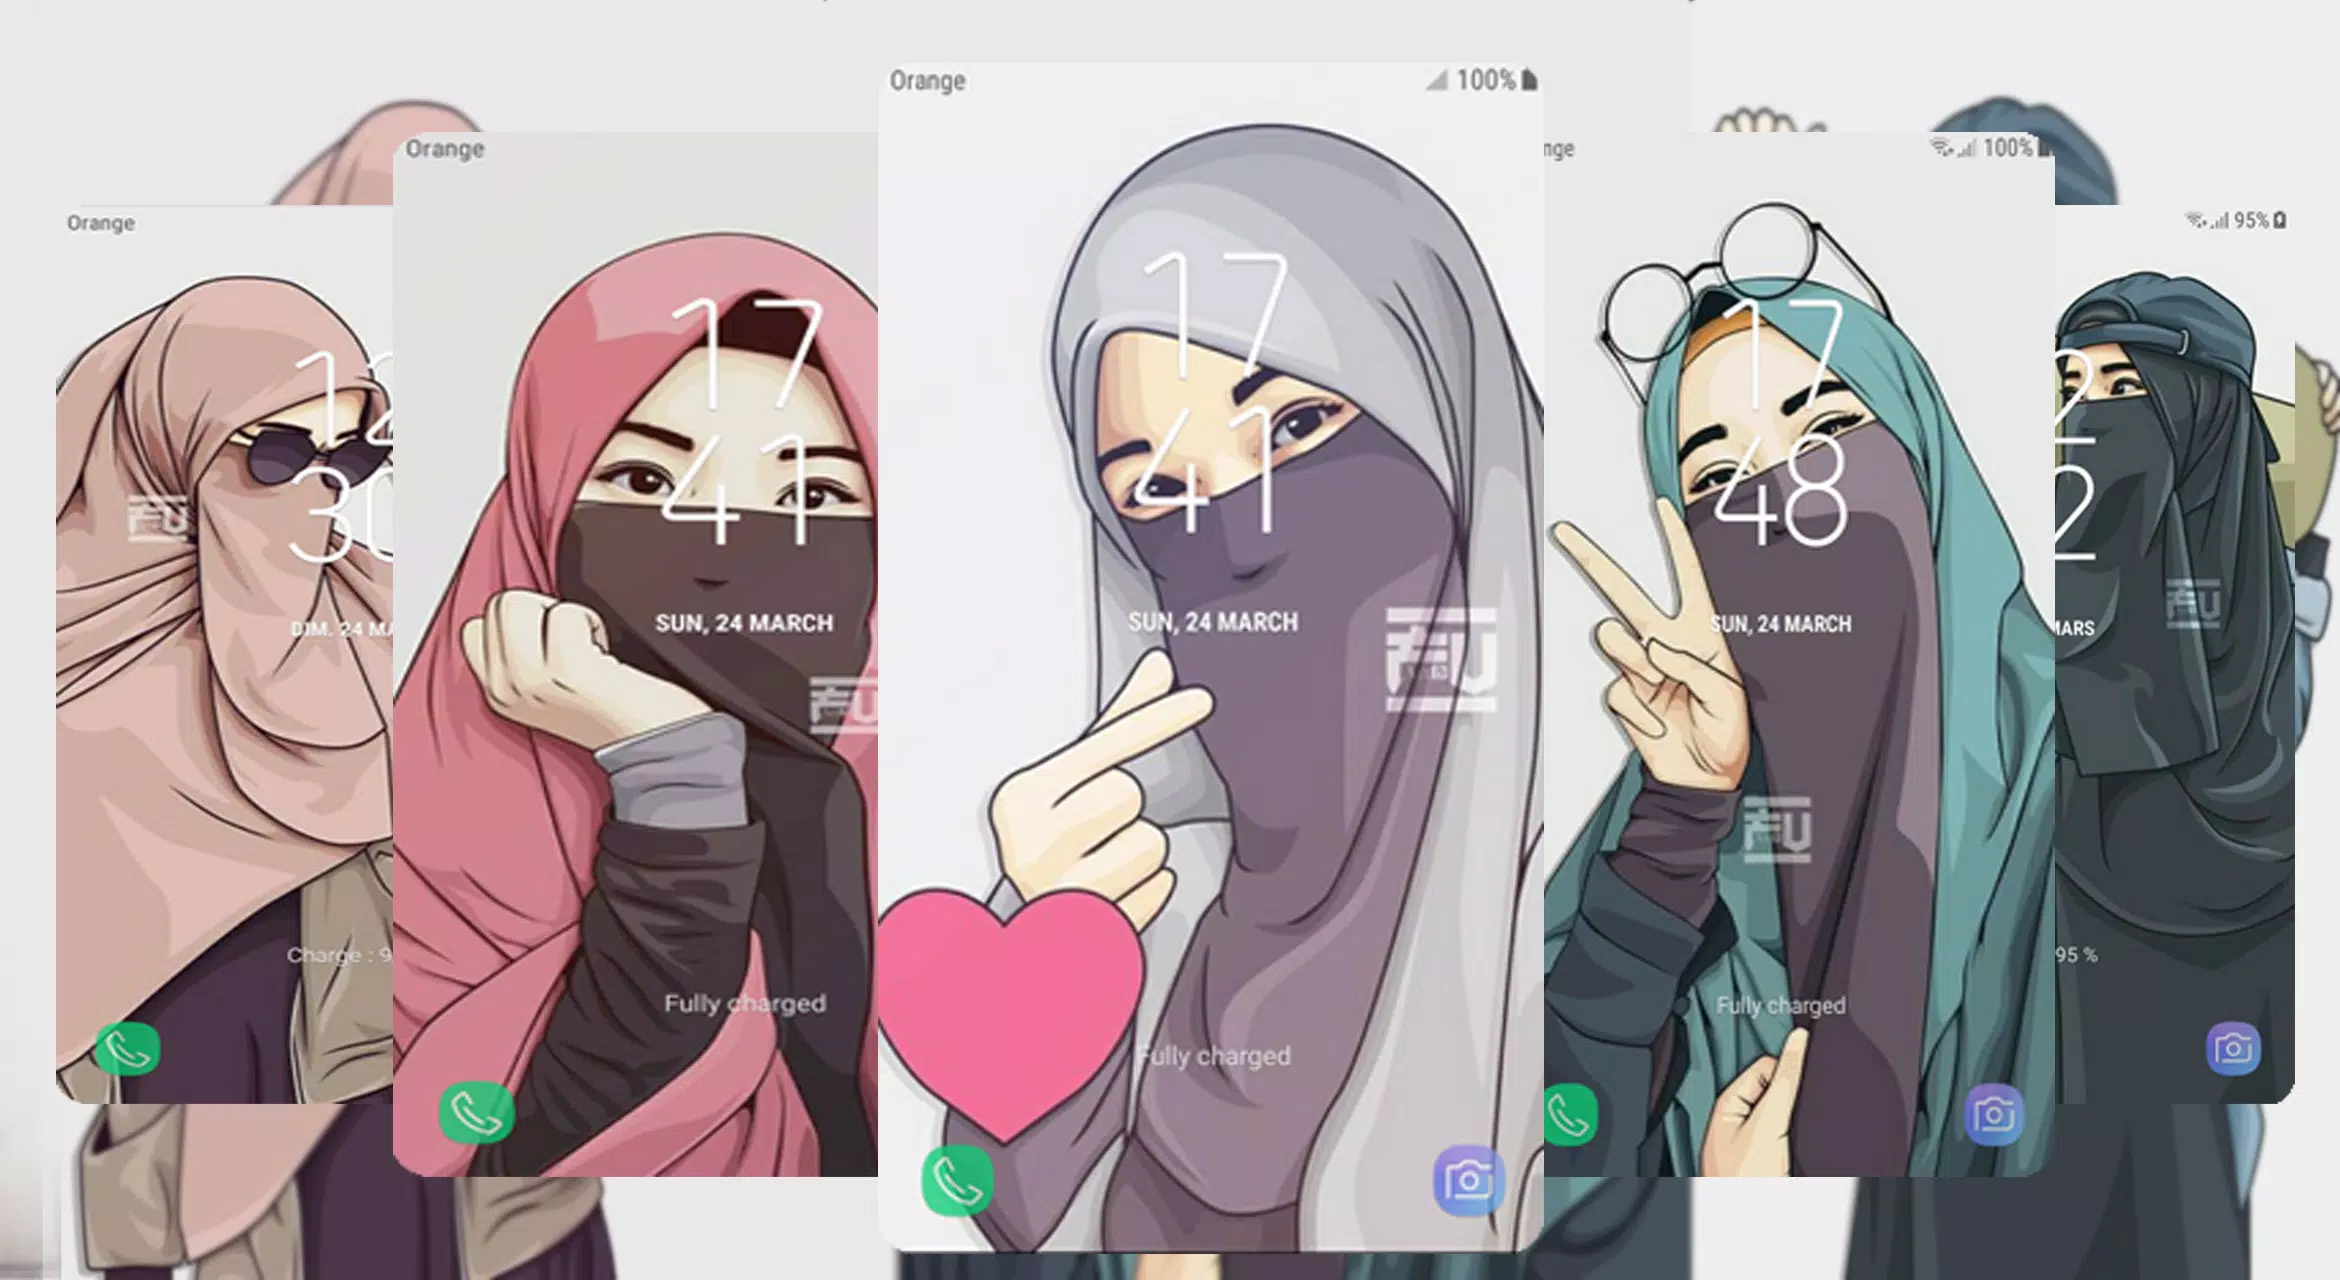 100+] Hijab Wallpapers